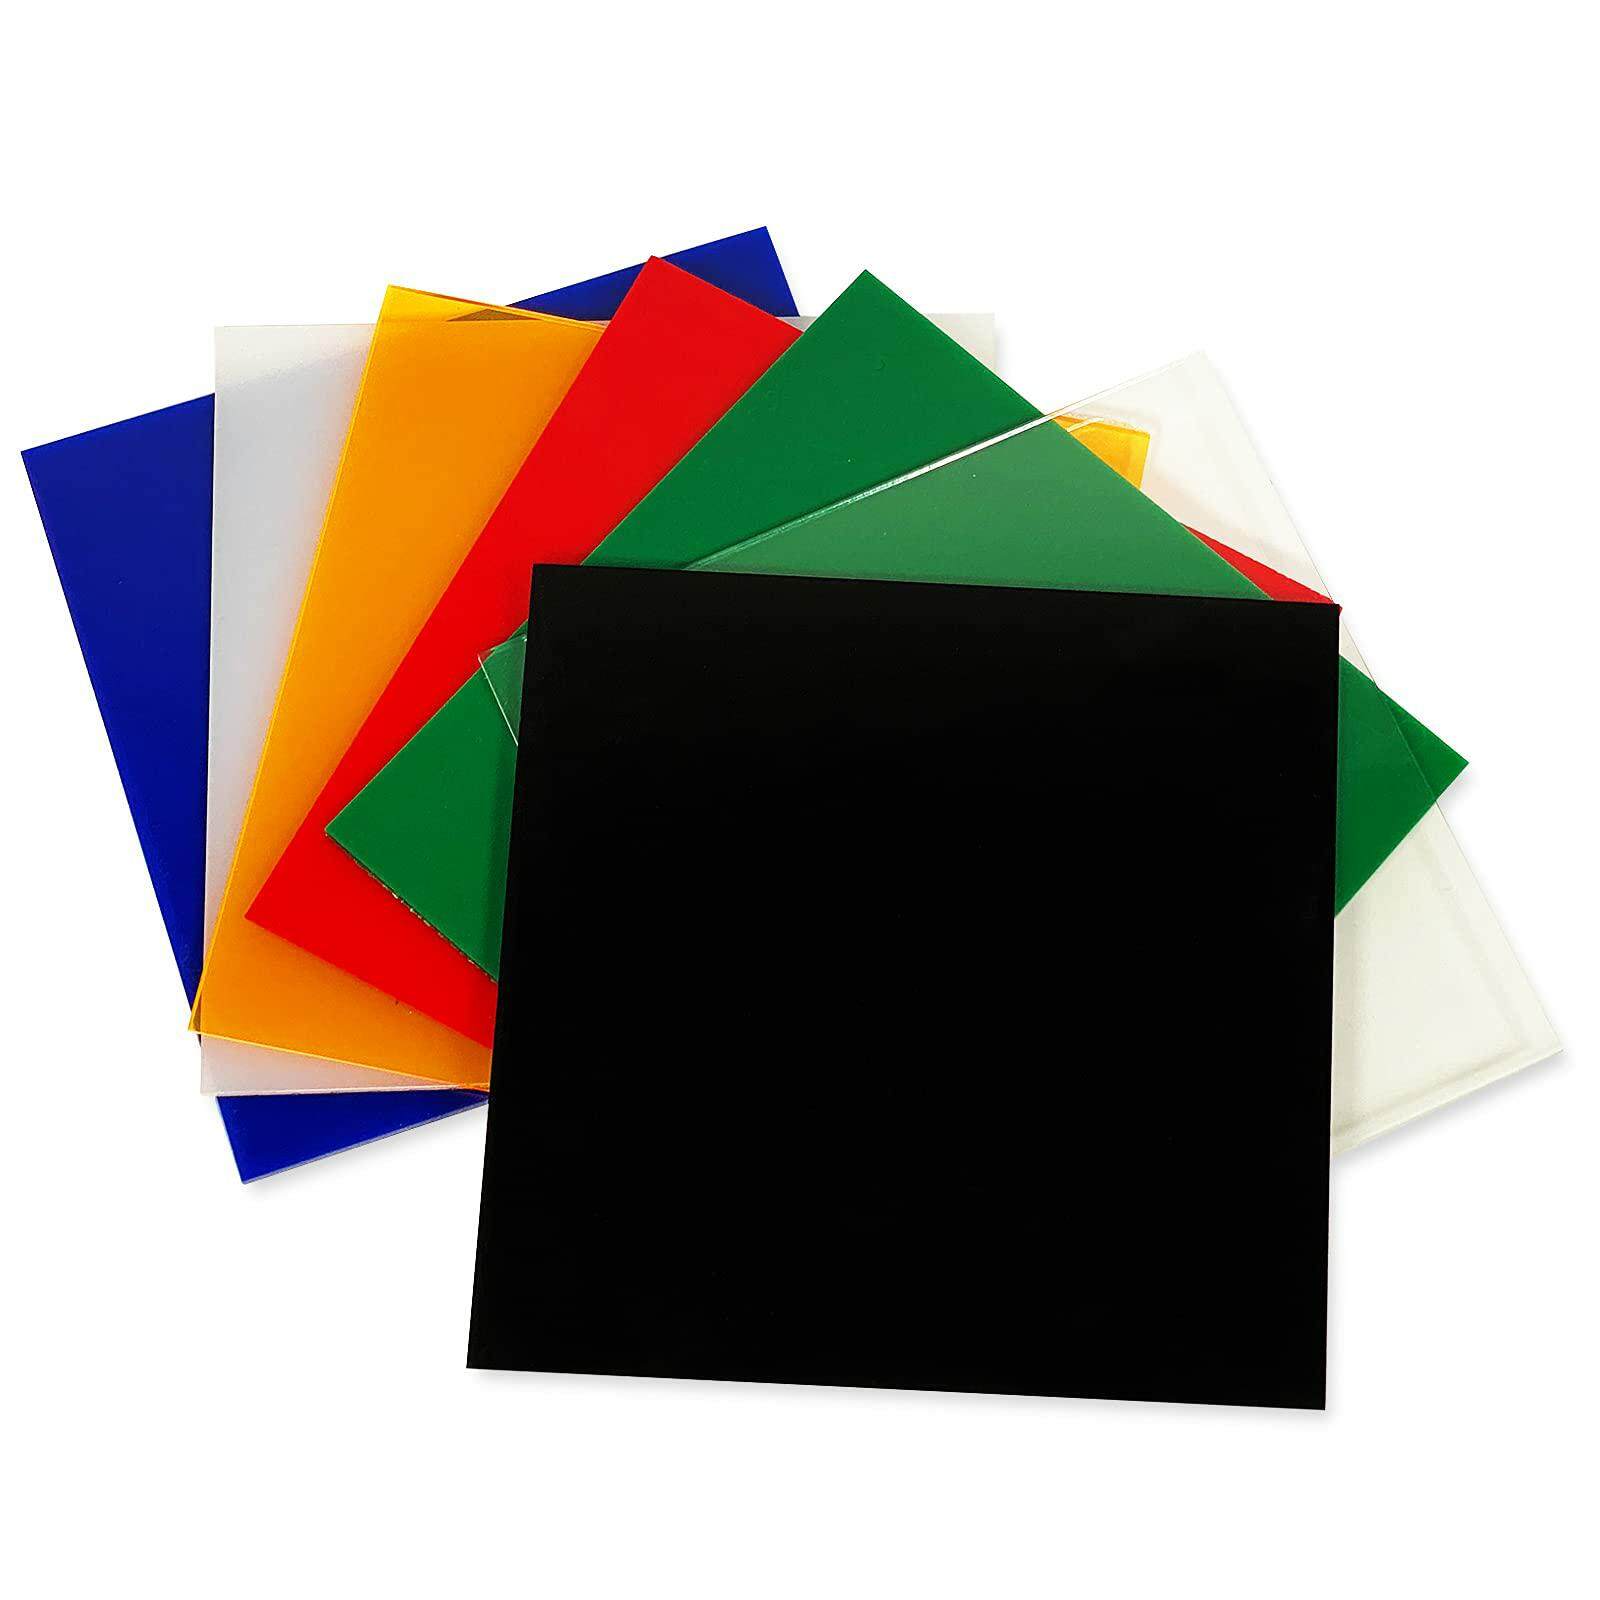 pmma acrylic sheet, unbreakable acrylic sheet, thermoplastic sheet, thermoplastic acrylic sheet, pmma thermoplastic acrylic sheet